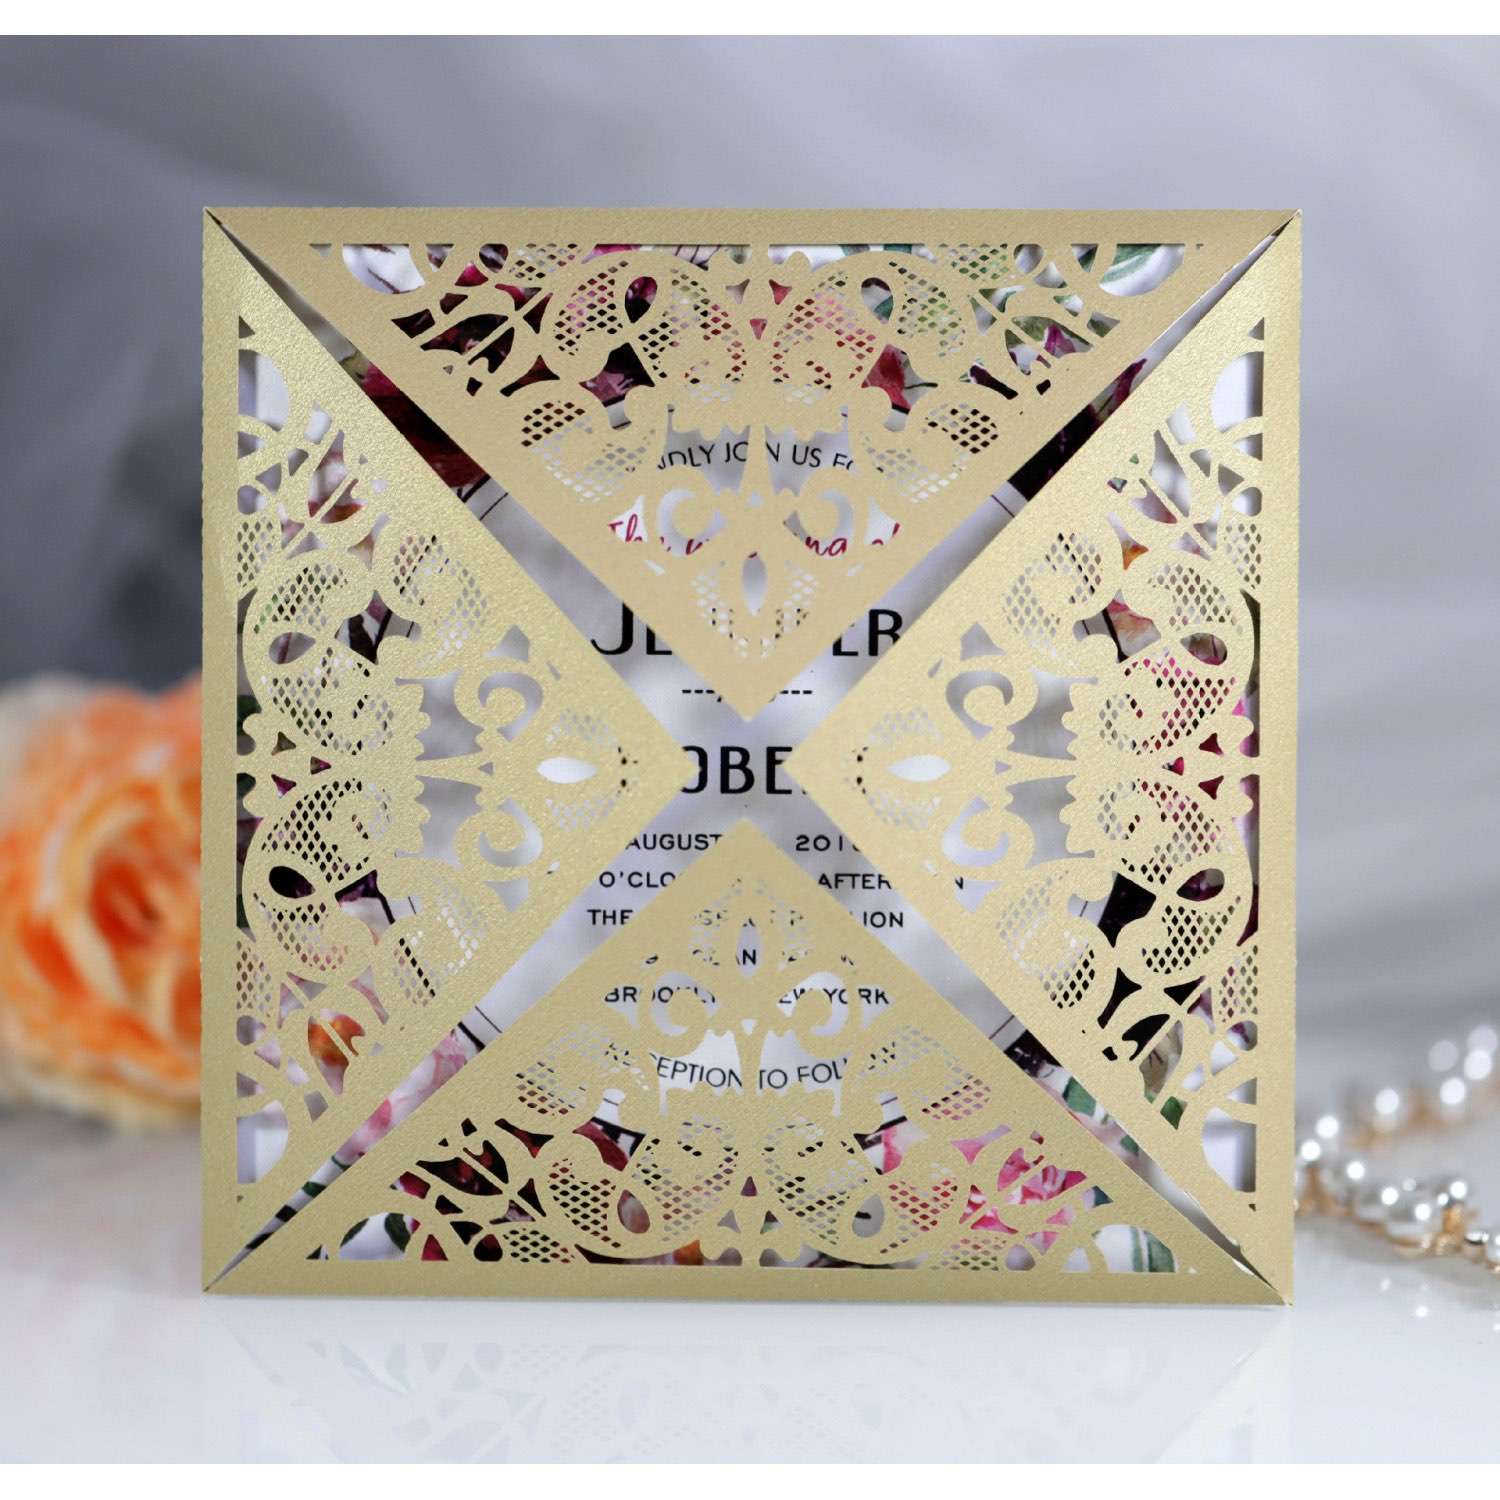 Glitter Invitation Card With Envelope Marriage Card Design Laser Cut Square Wedding Invitation